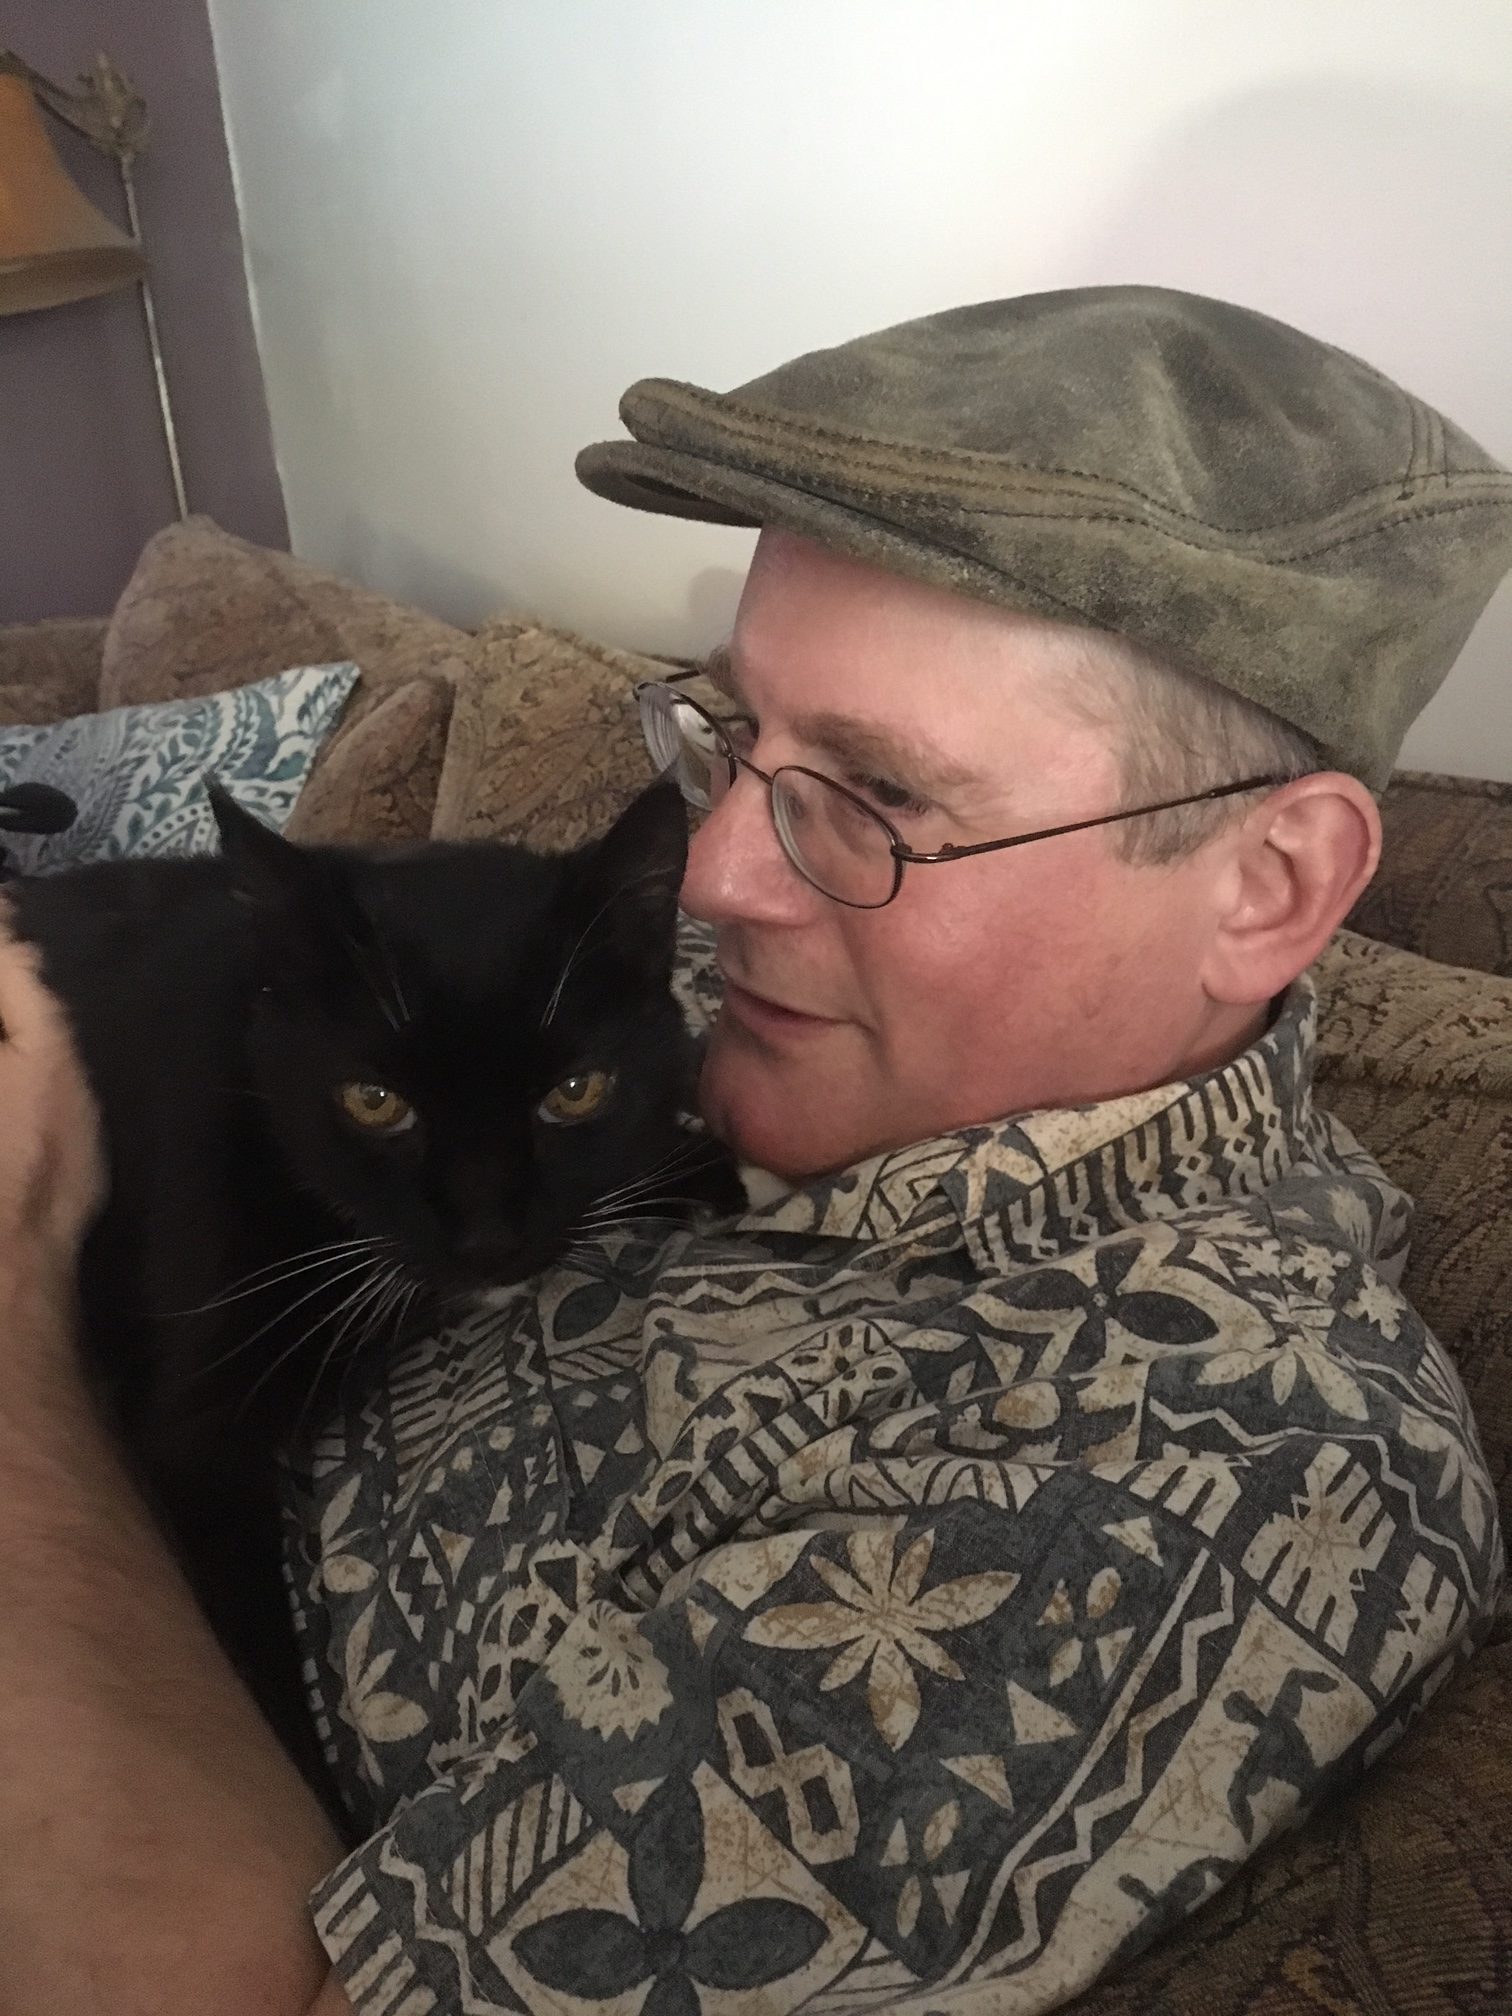 Man Cuddling Tuxedo Cat On His Chest